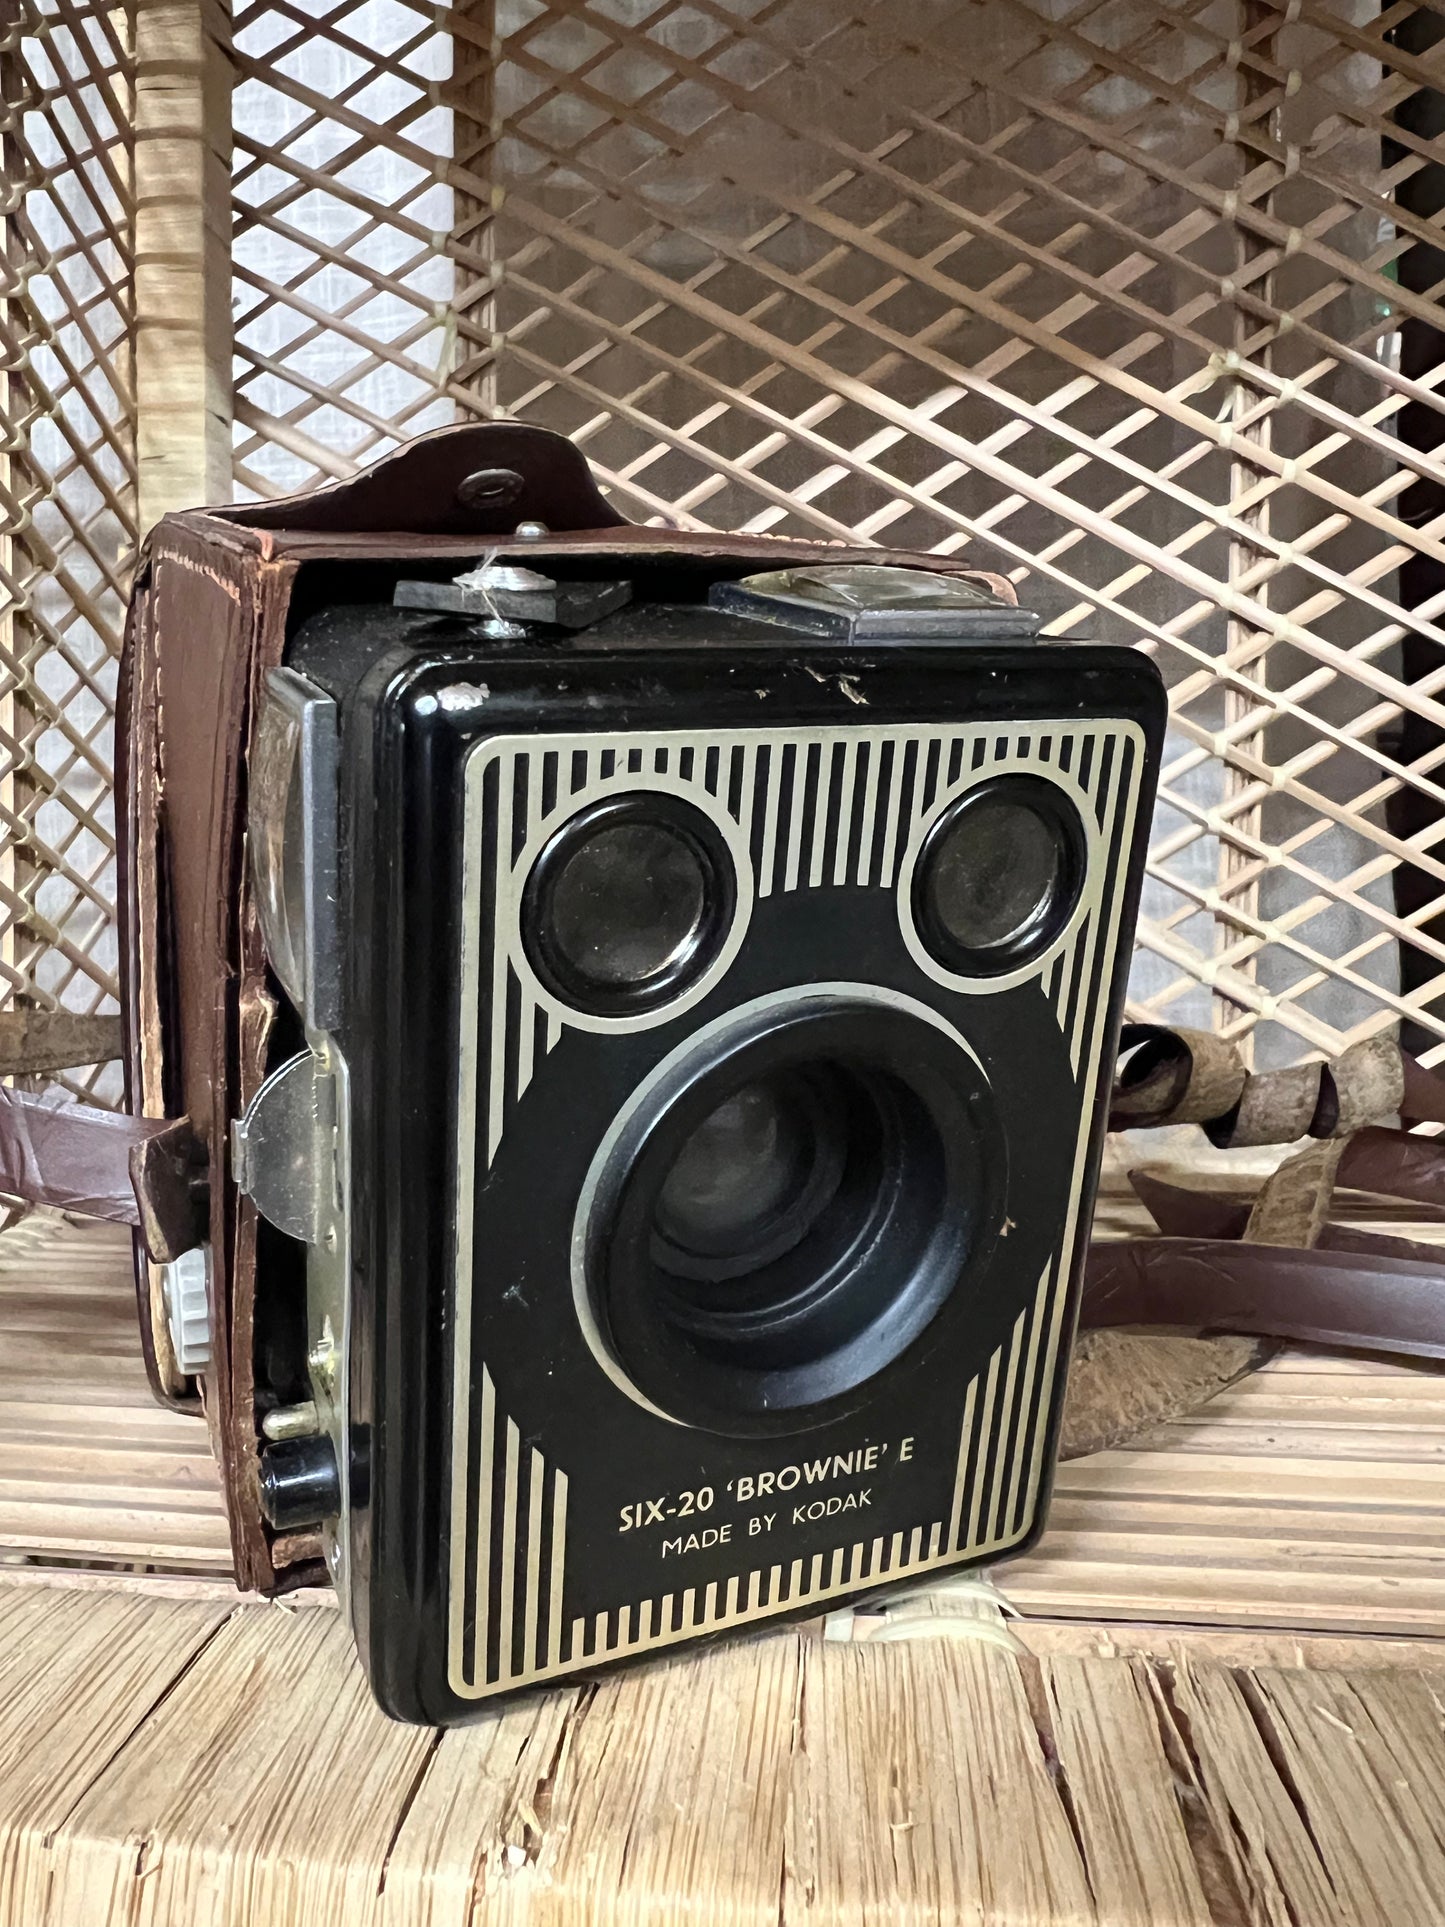 Art deco Camera - Six-20 ”Brownie” E Kodak